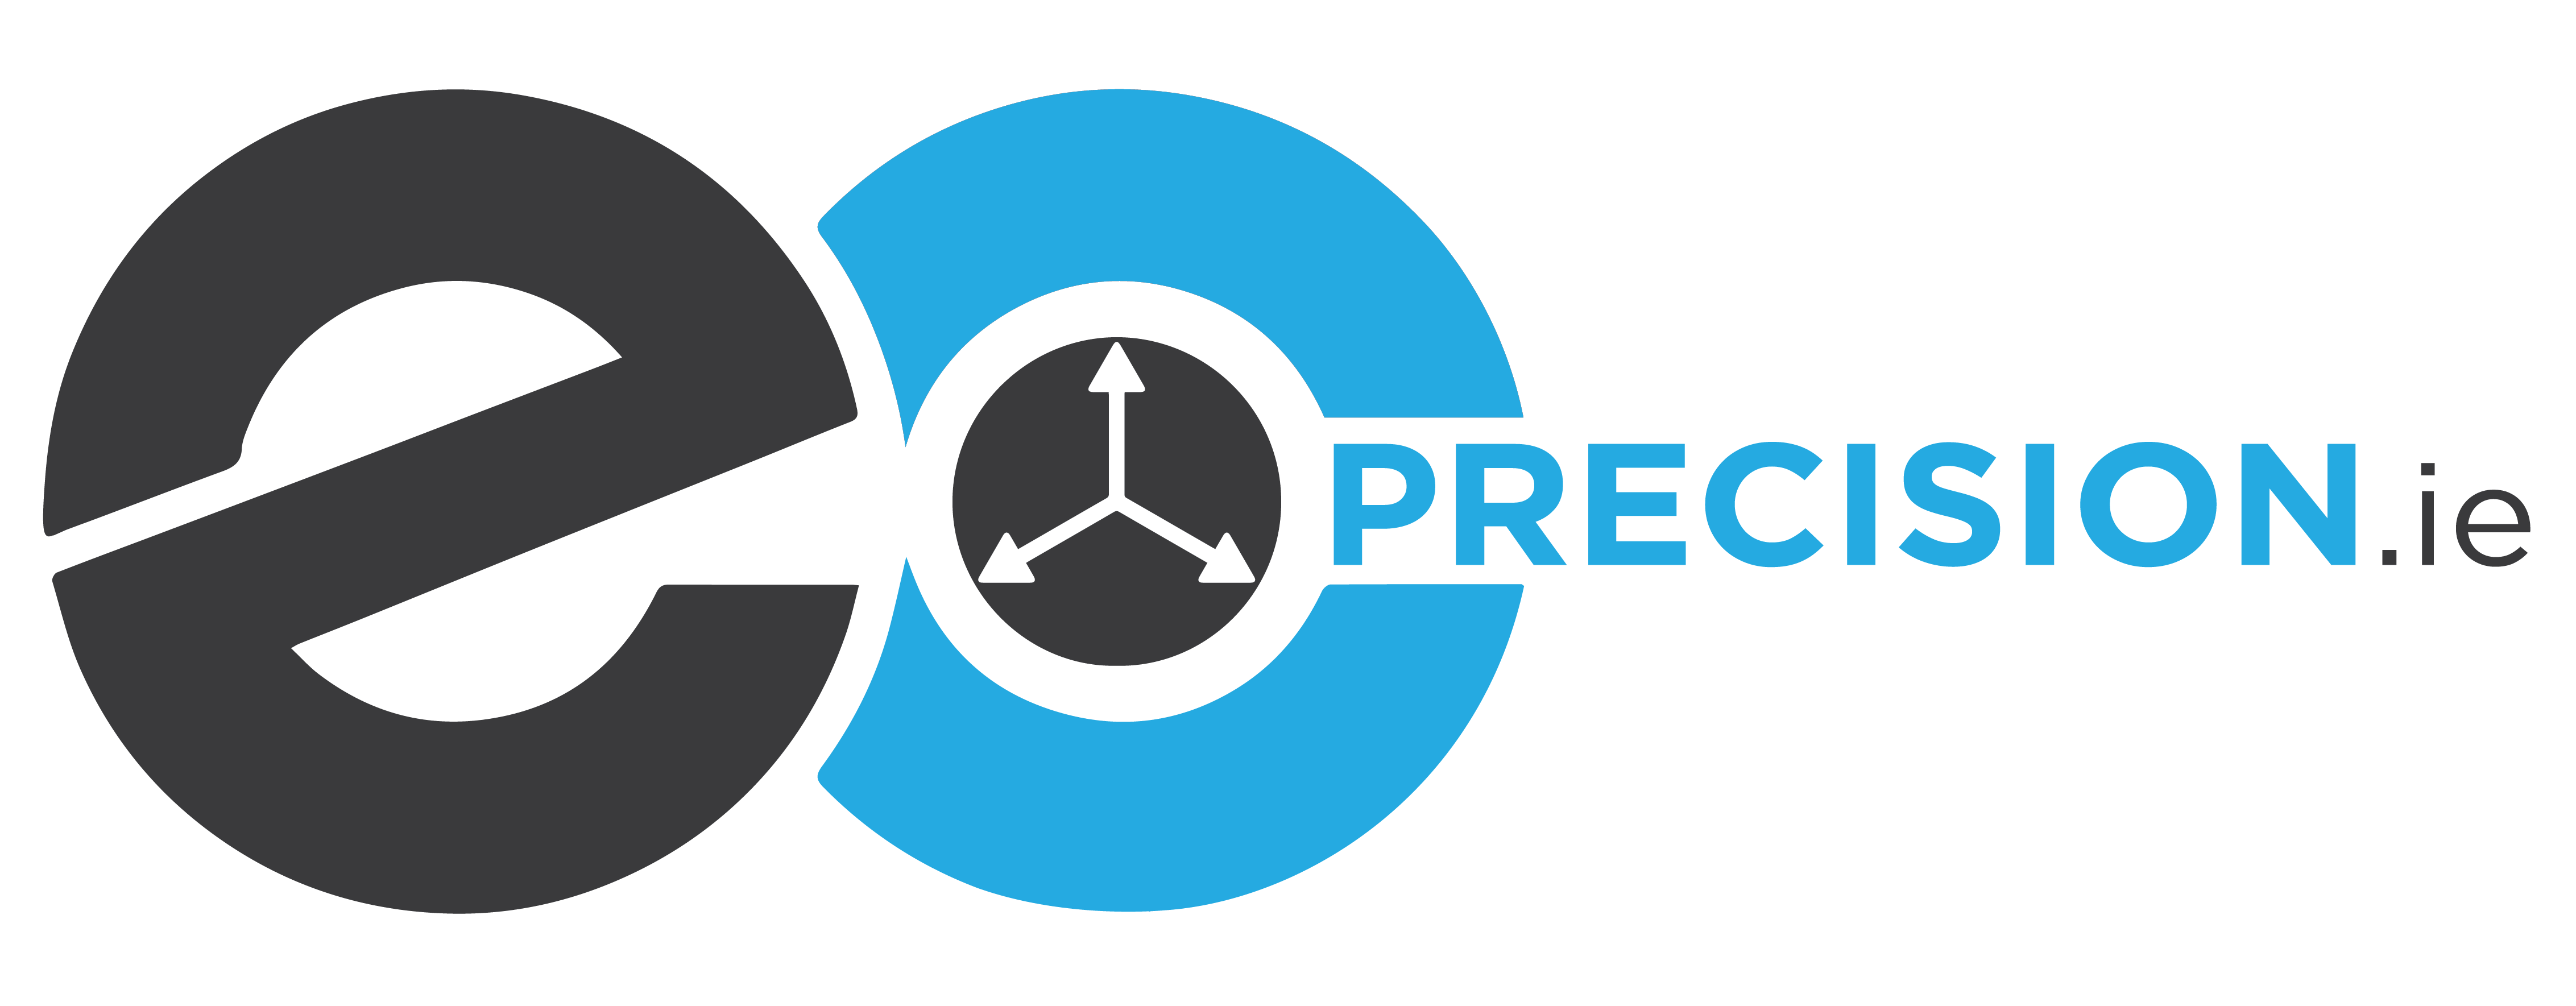 EC Precision